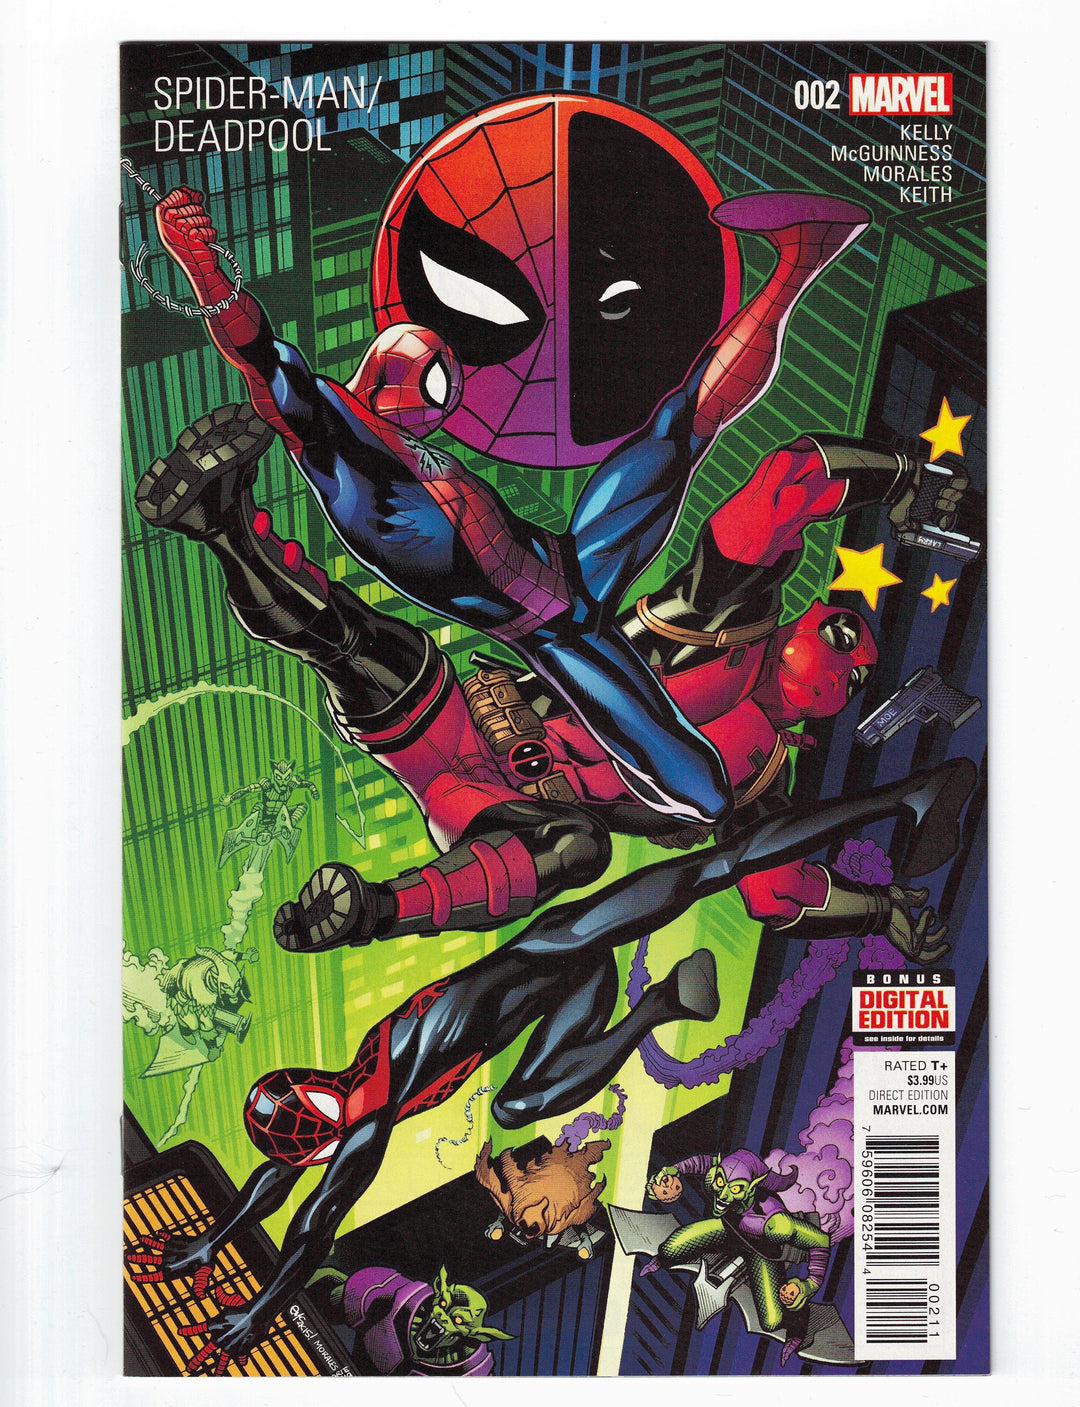 Spider-Man Deadpool #1-4